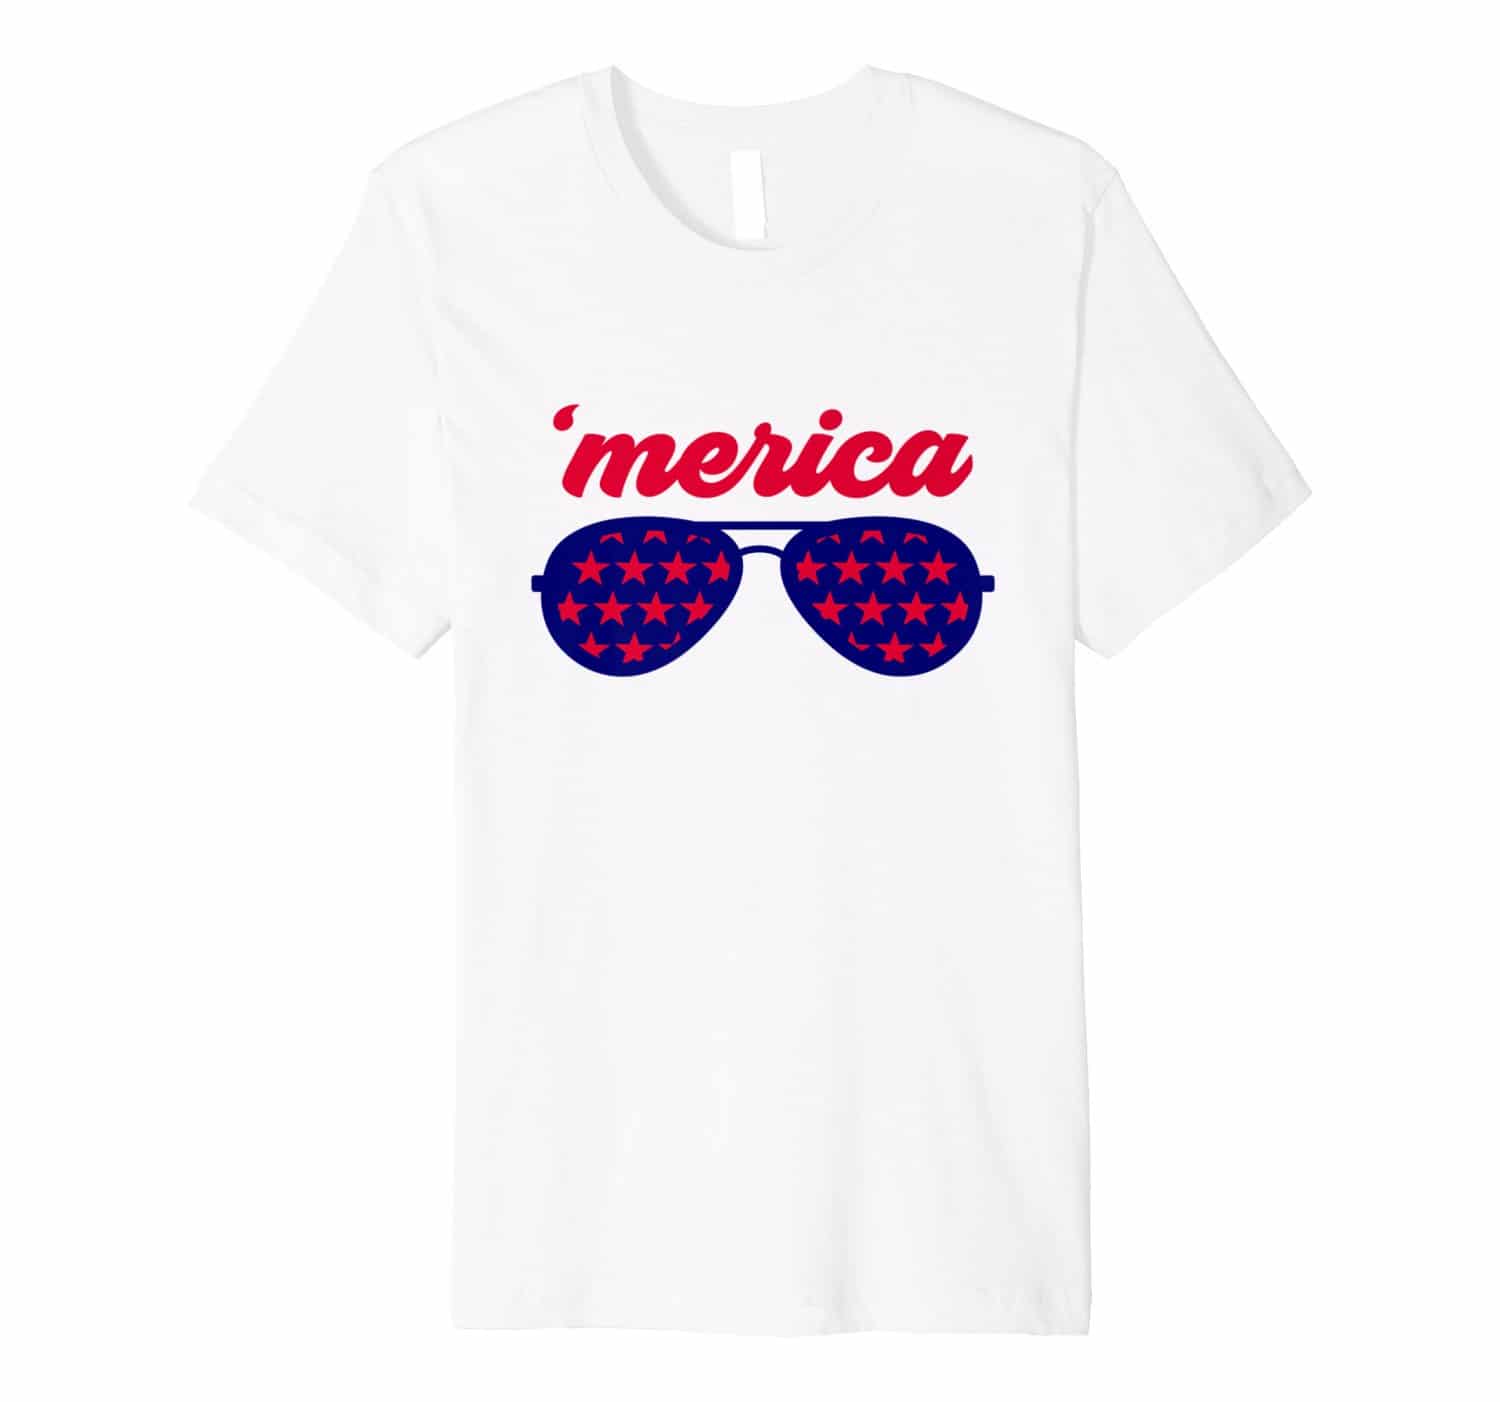 Funny Patriotic American T-Shirts 2018: 'Merica July 4th Shirt